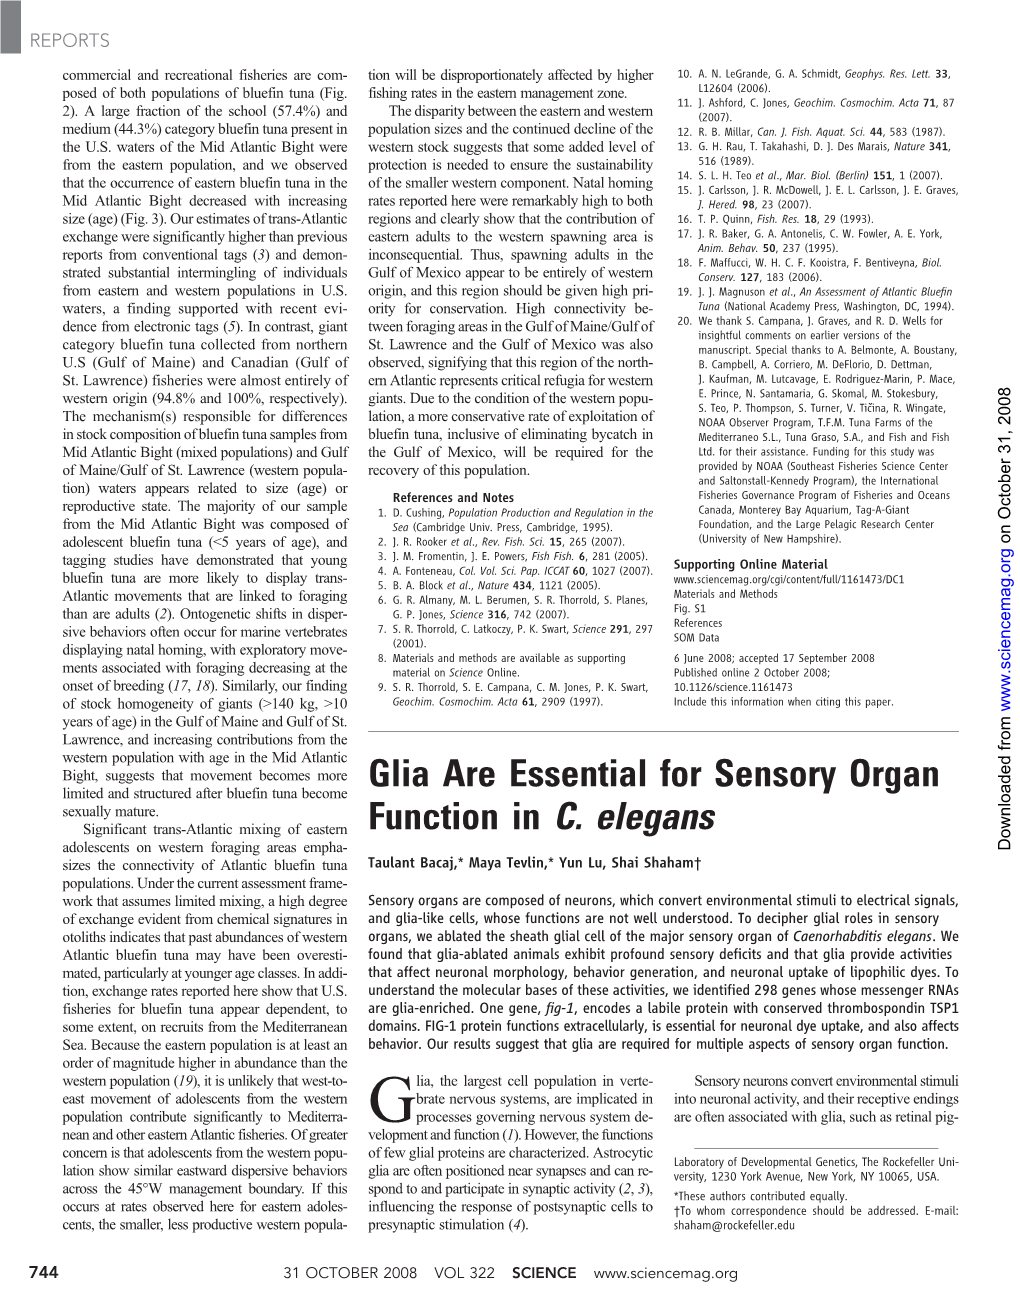 Glia Are Essential for Sensory Organ Function in C. Elegans